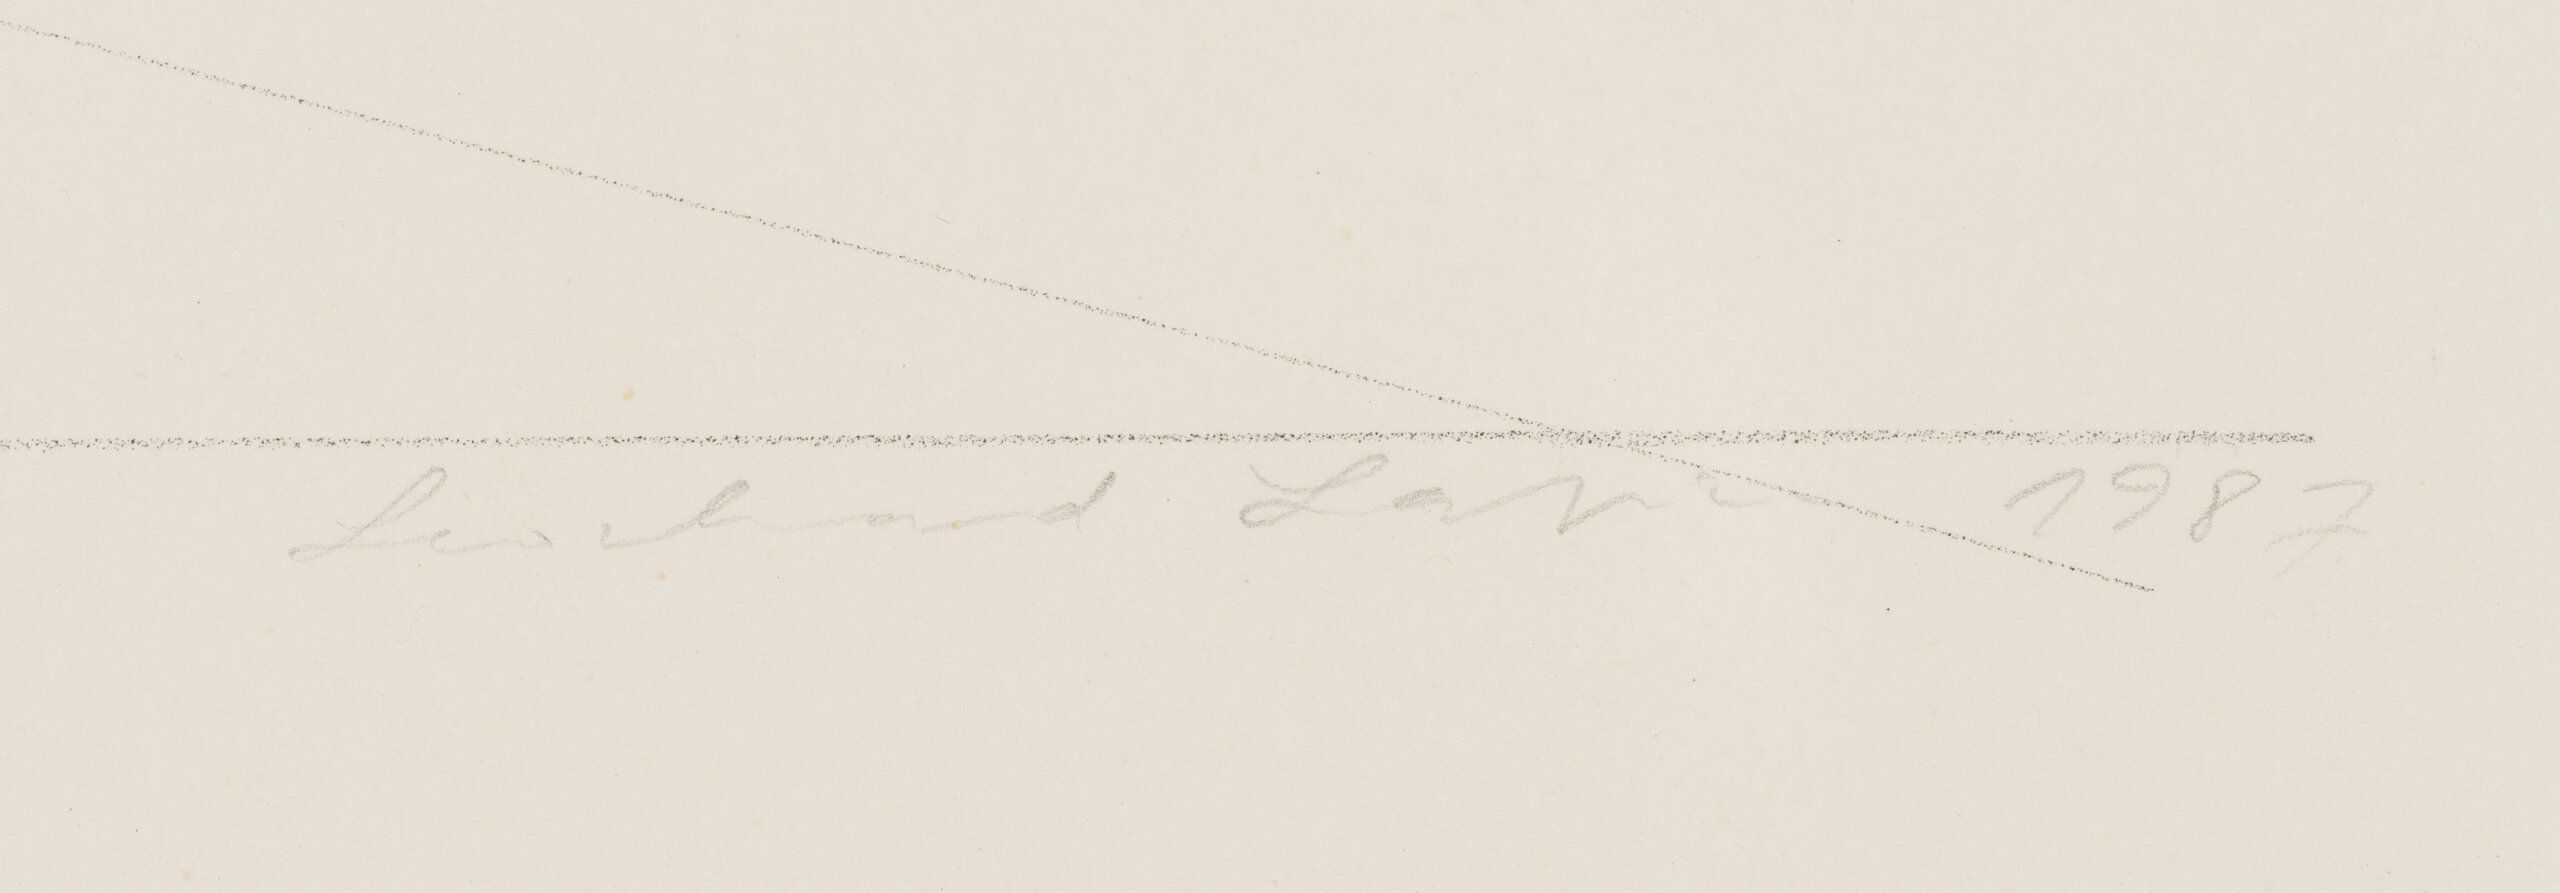 Leonhard Lapin “Protsess XIX”, 1987. 62 x 60 cm.